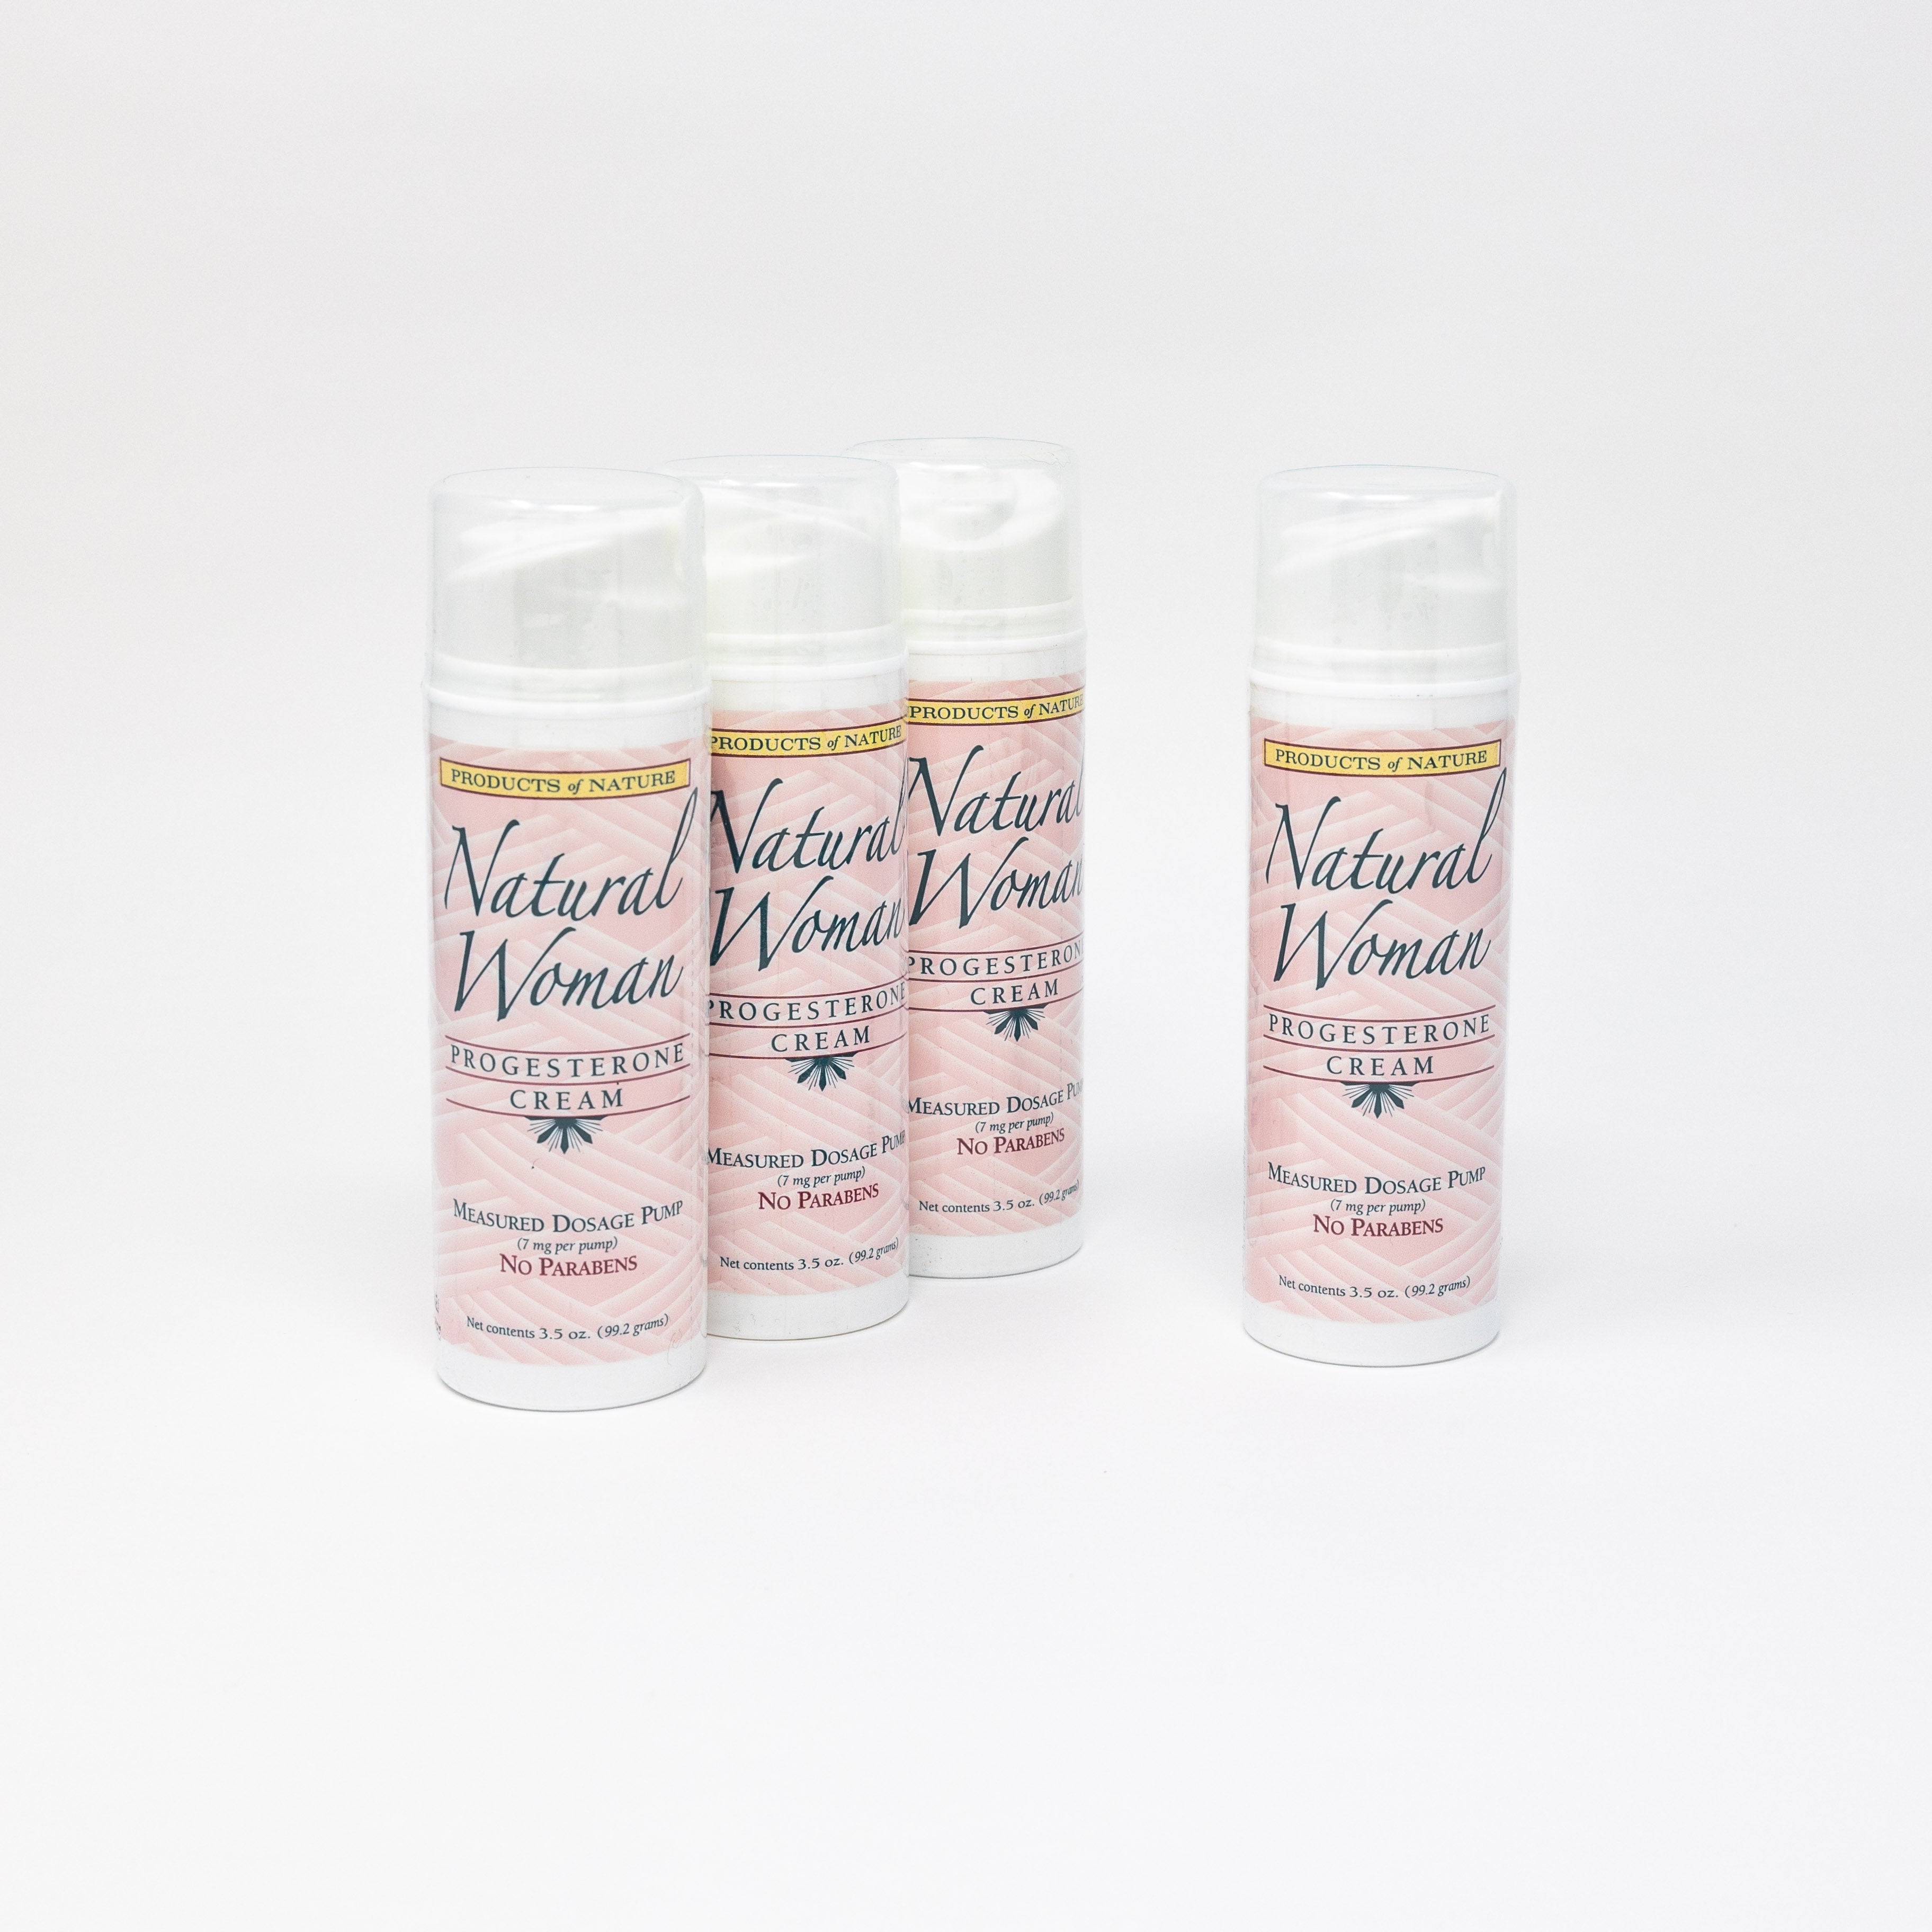 Natural Woman Progesterone Cream - Buy 3 get 1 free - 3.5 oz. pumps